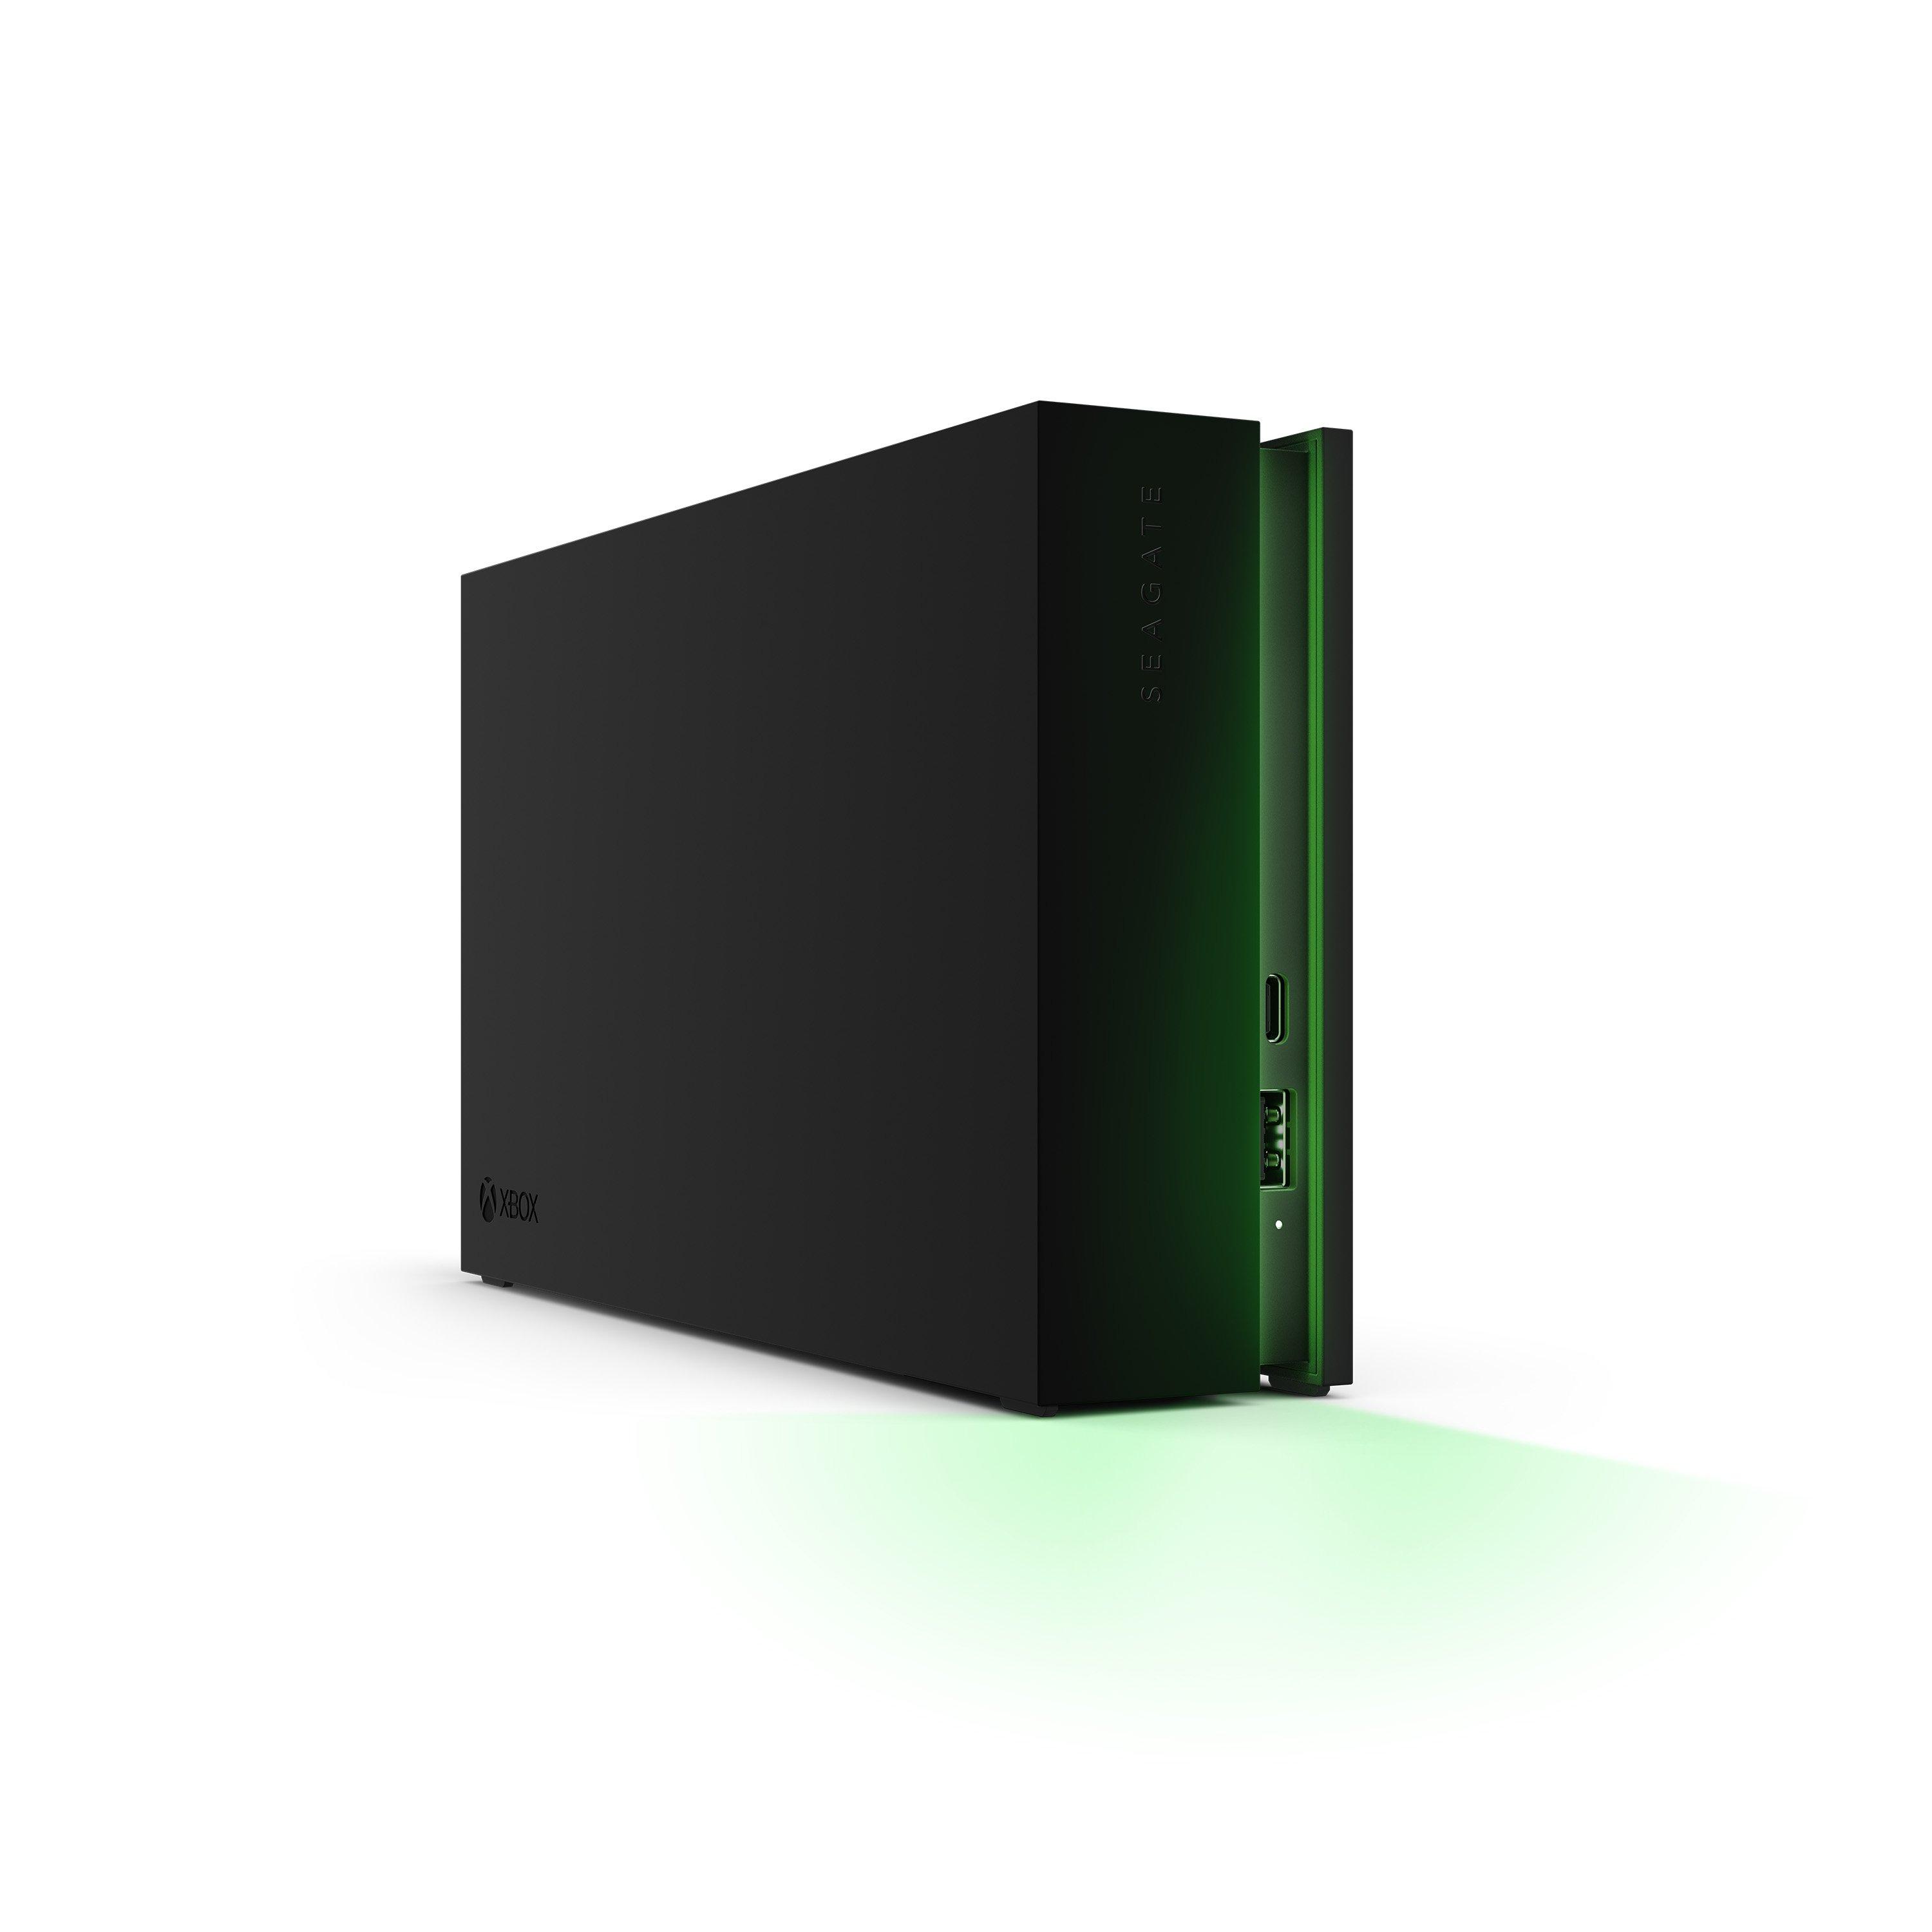 Seagate 8TB Game Drive Hub for Xbox One